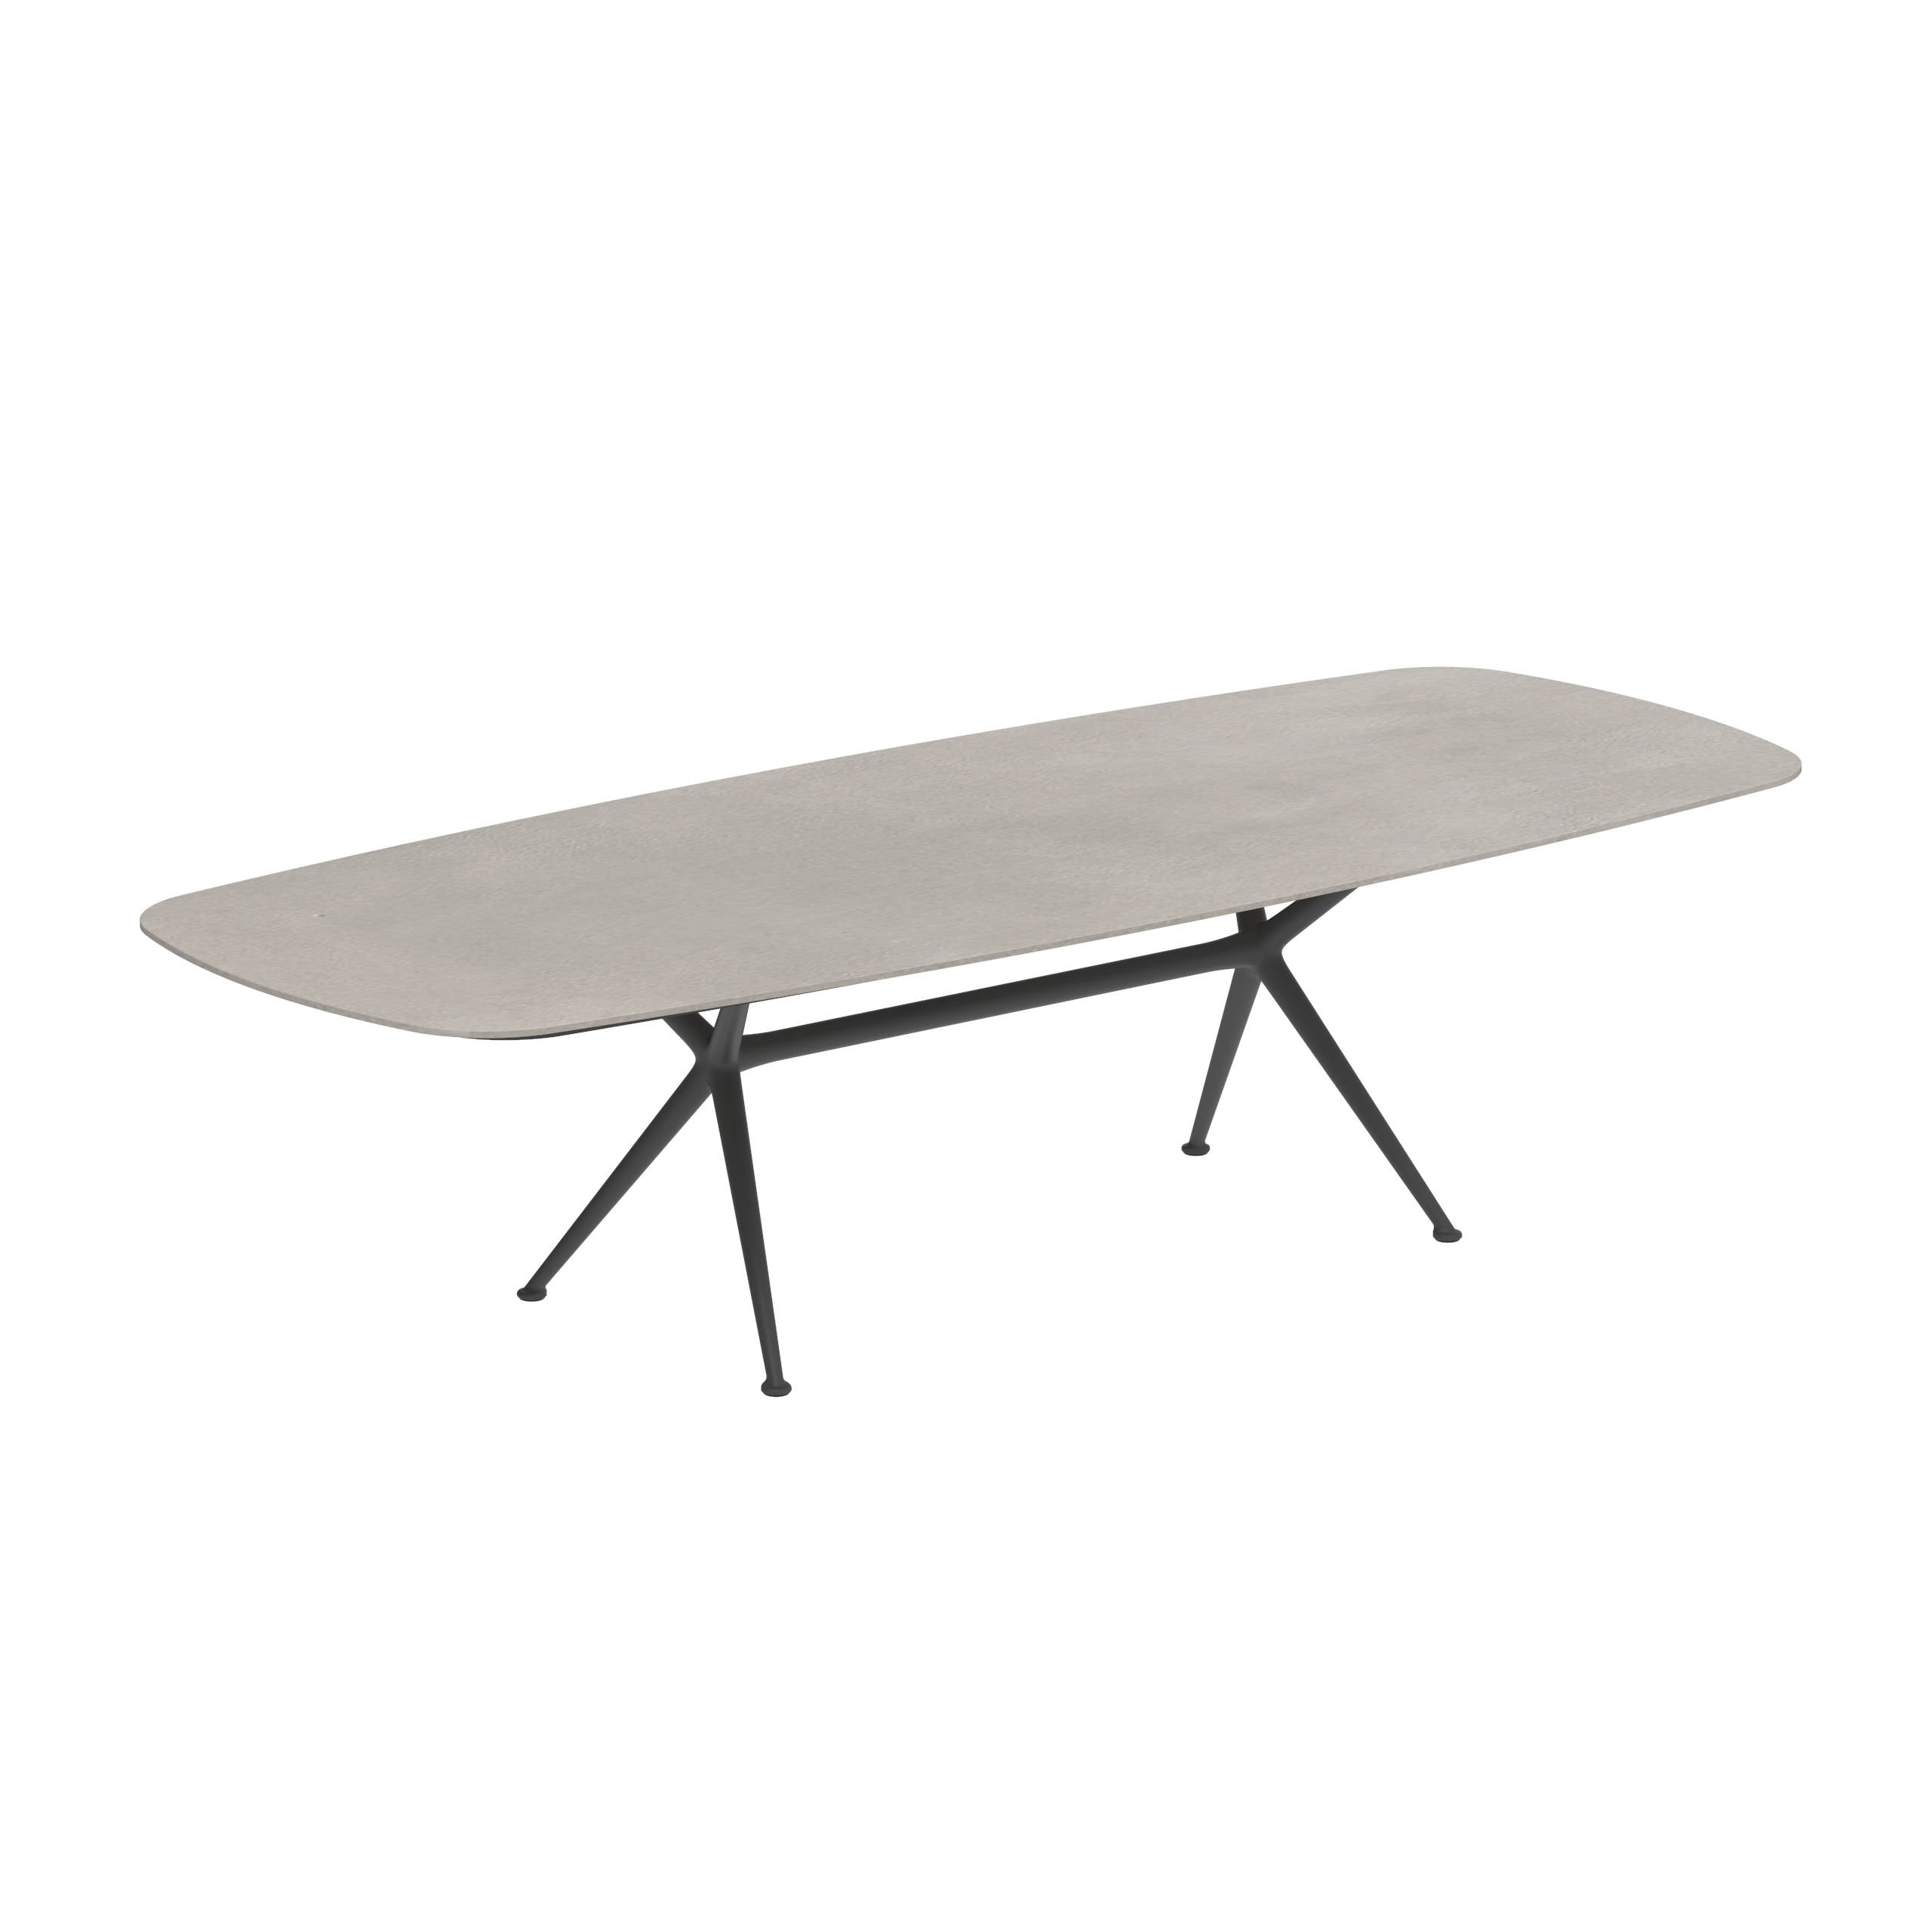 Exes Table 300x120cm Alu Legs Anthracite - Table Top Ceramic Cemento Luminoso